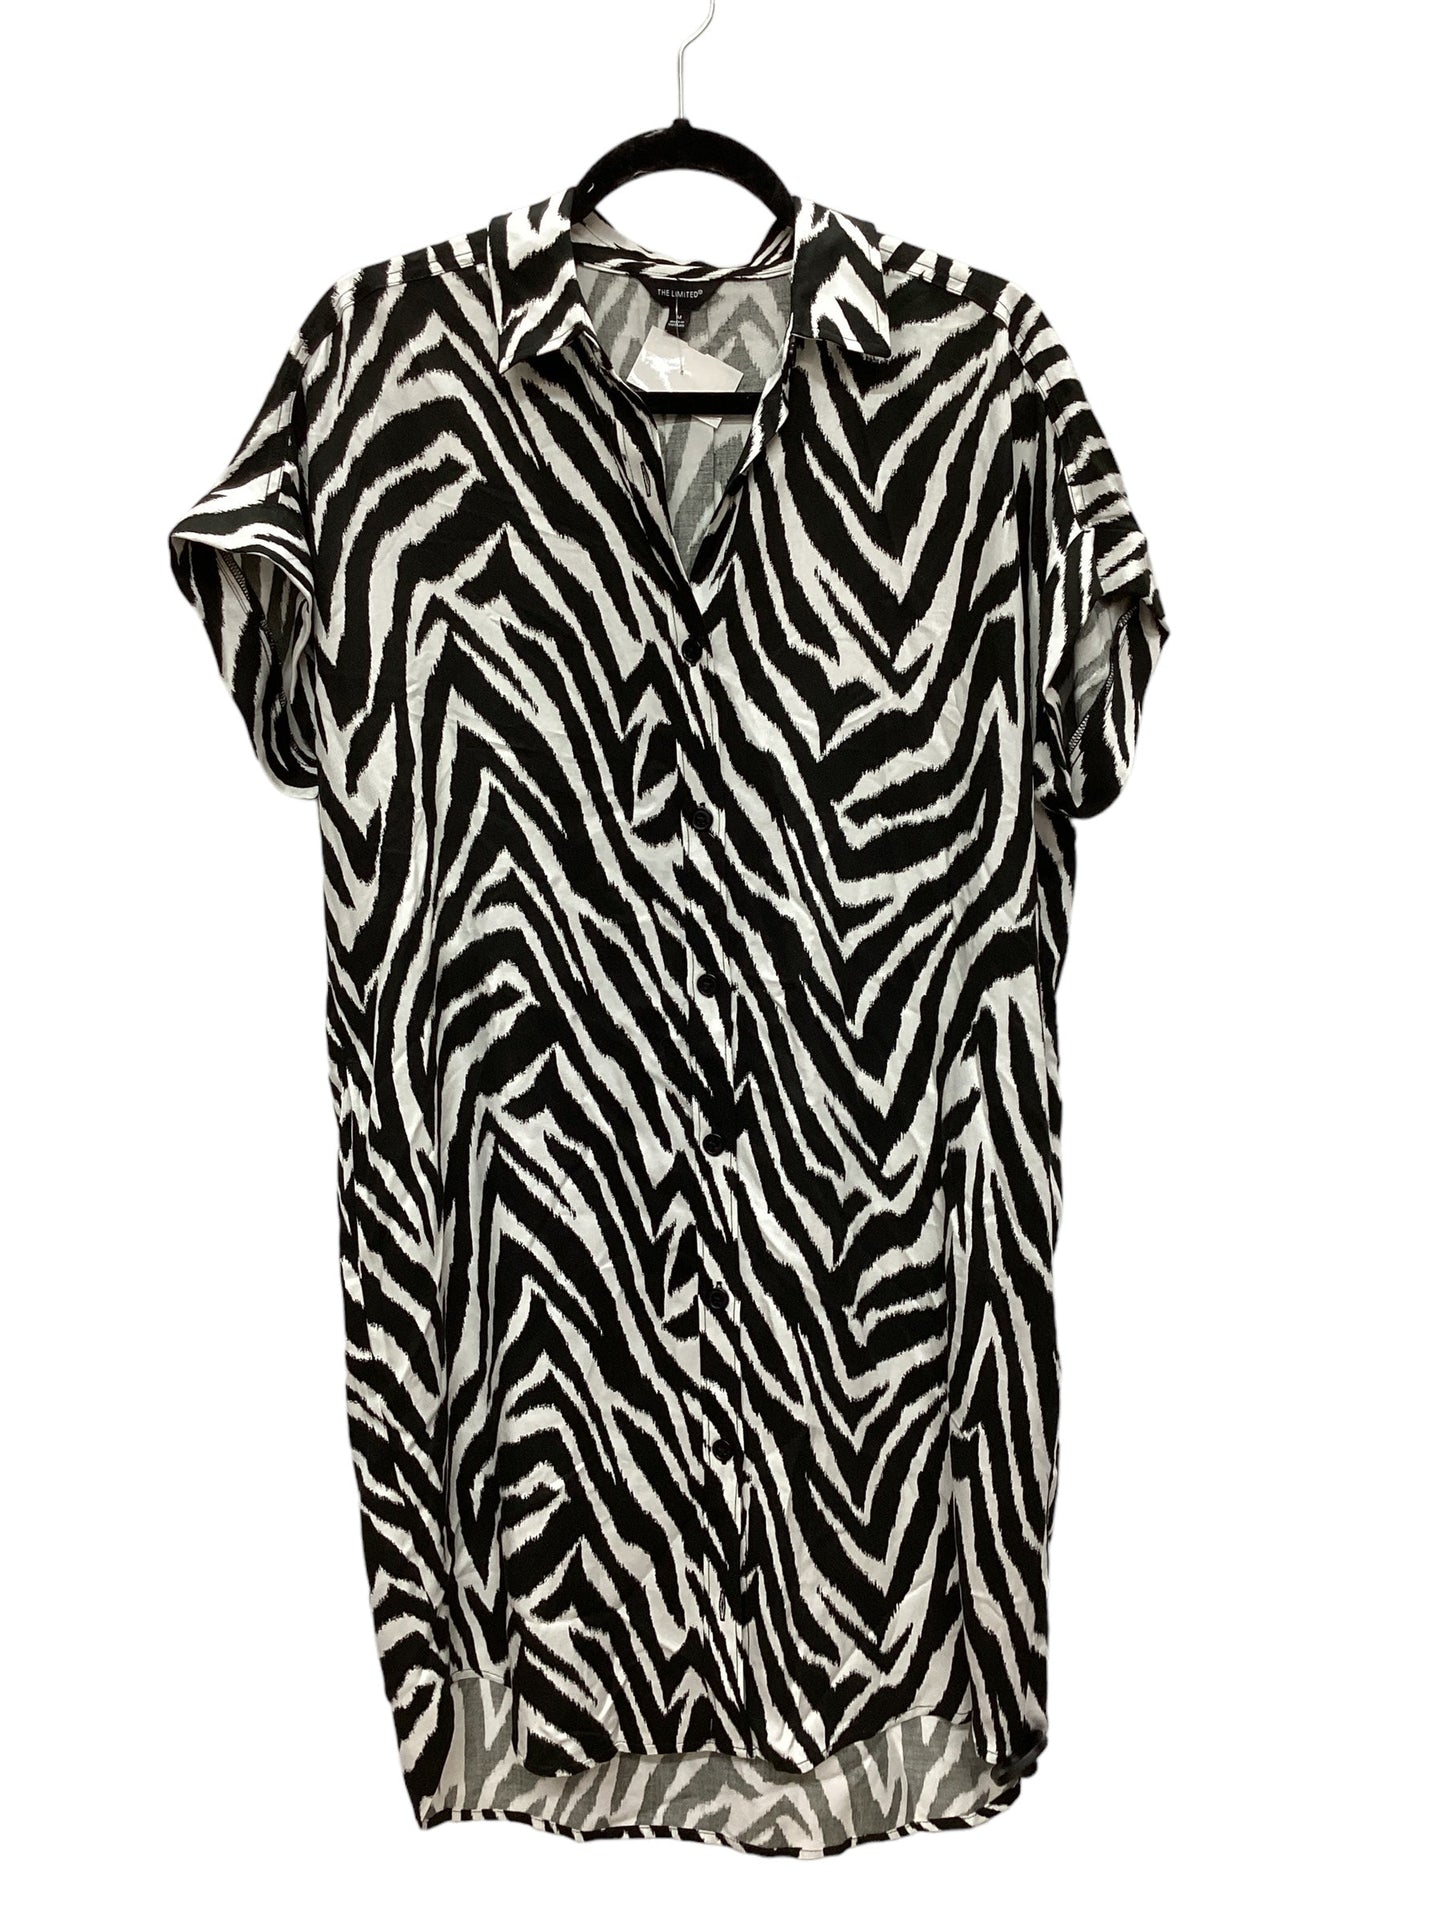 Zebra Print Dress Casual Midi Limited, Size M